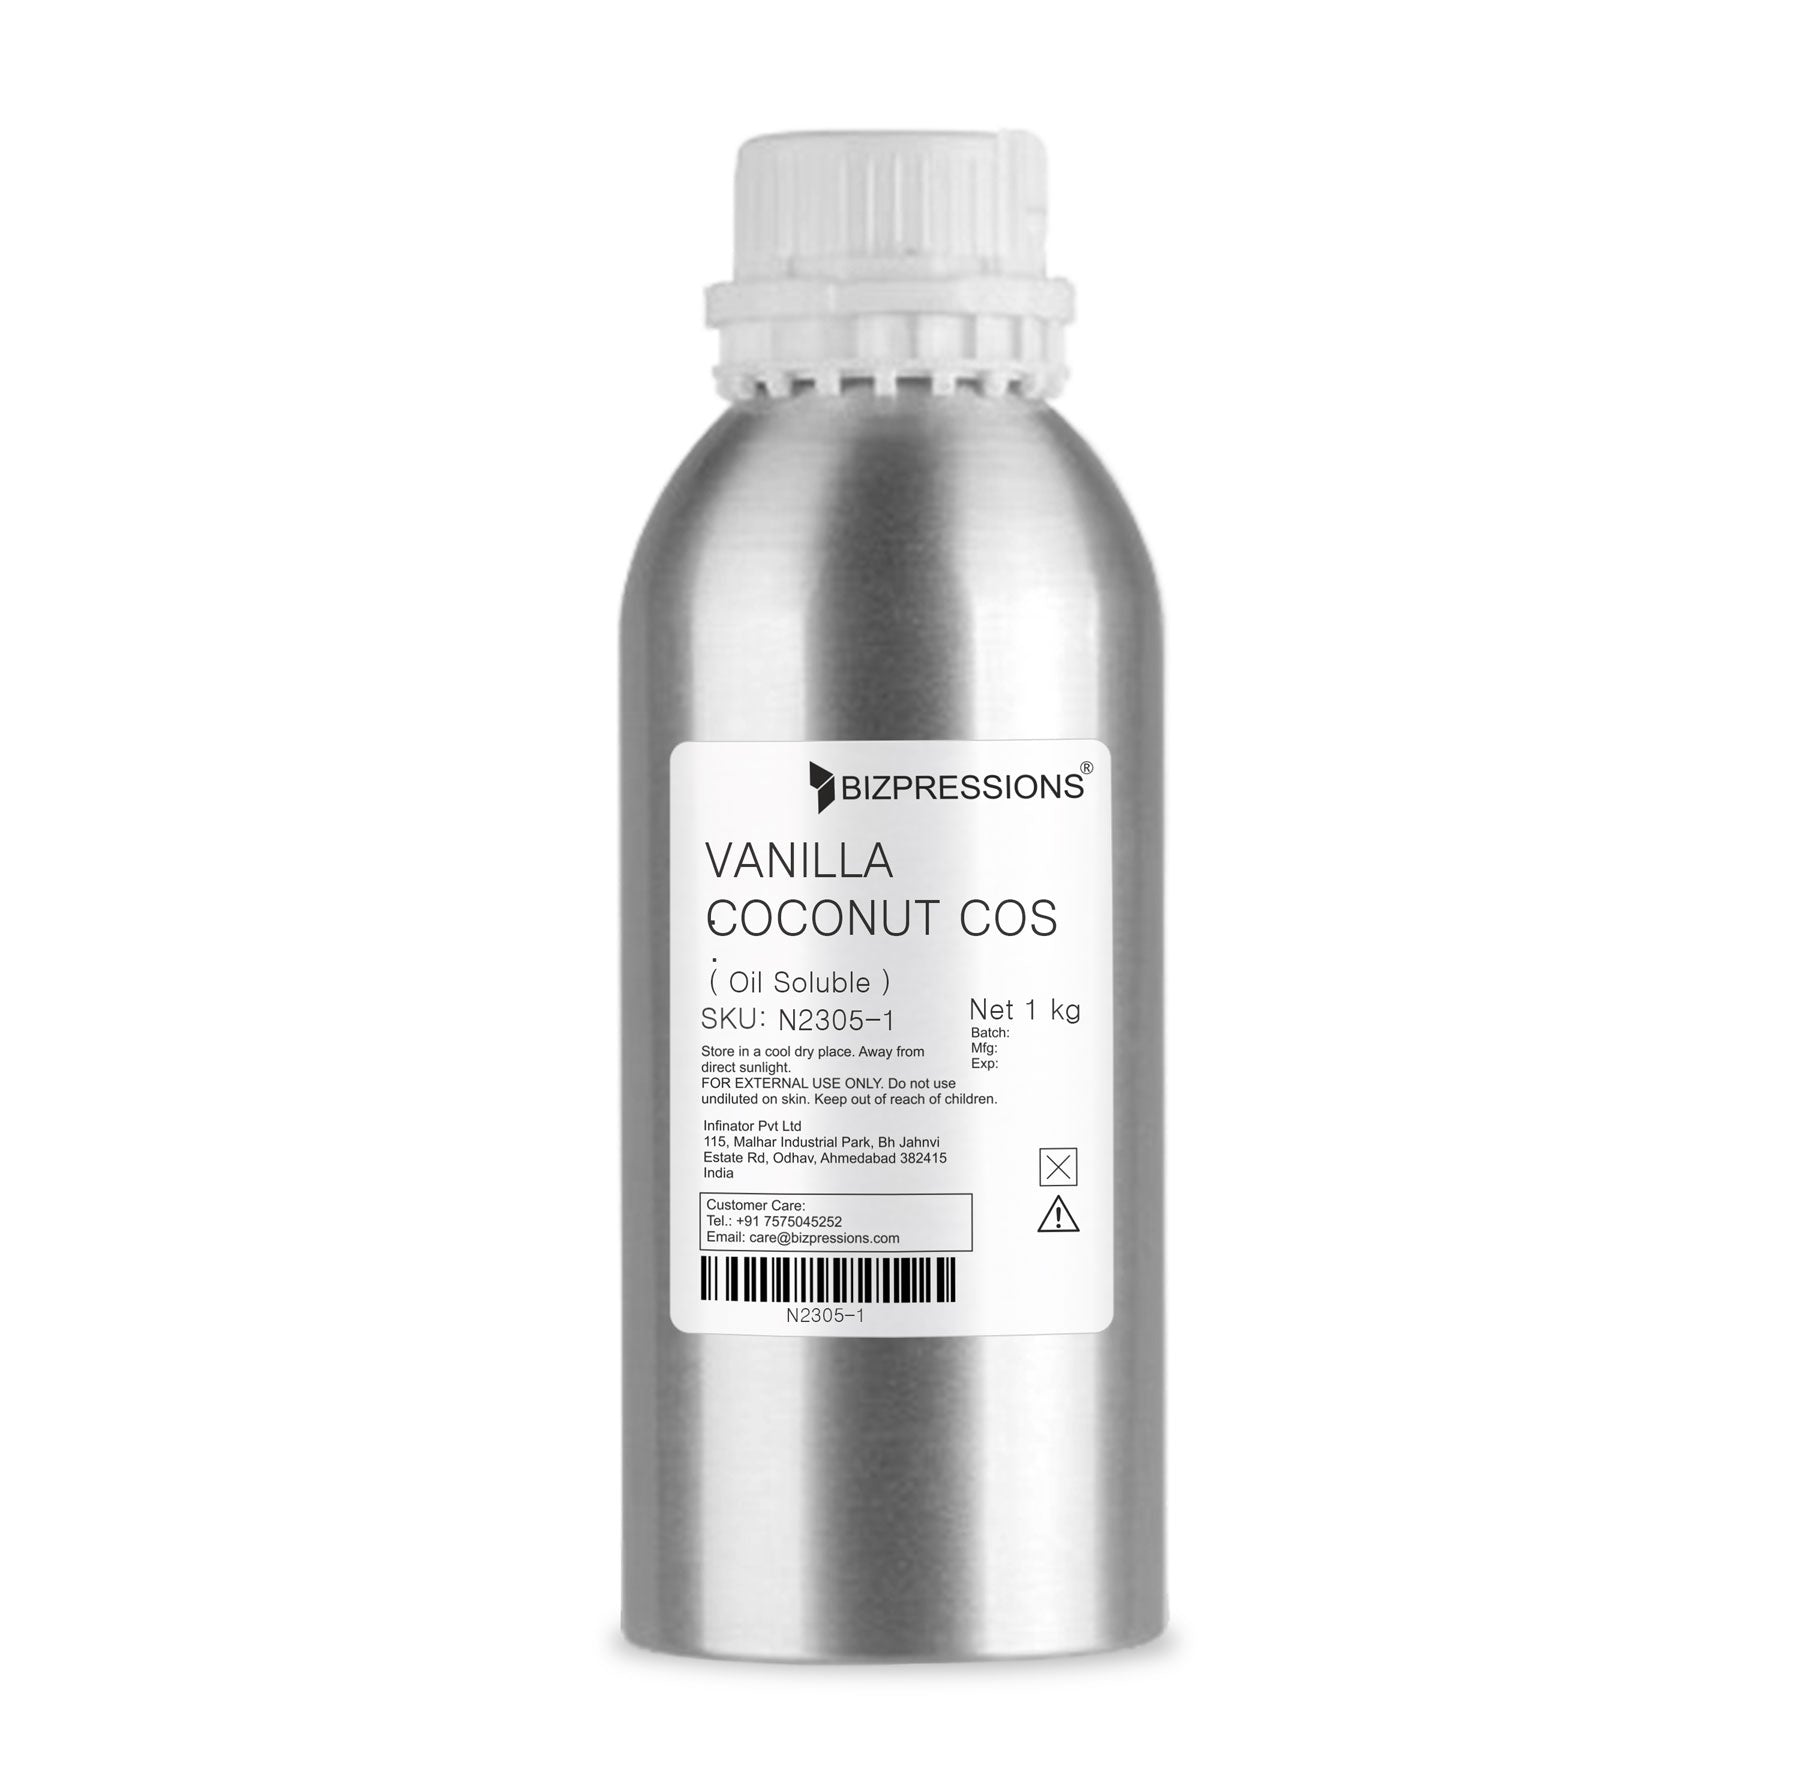 VANILLA COCONUT COS - Fragrance ( Oil Soluble ) 1 kg